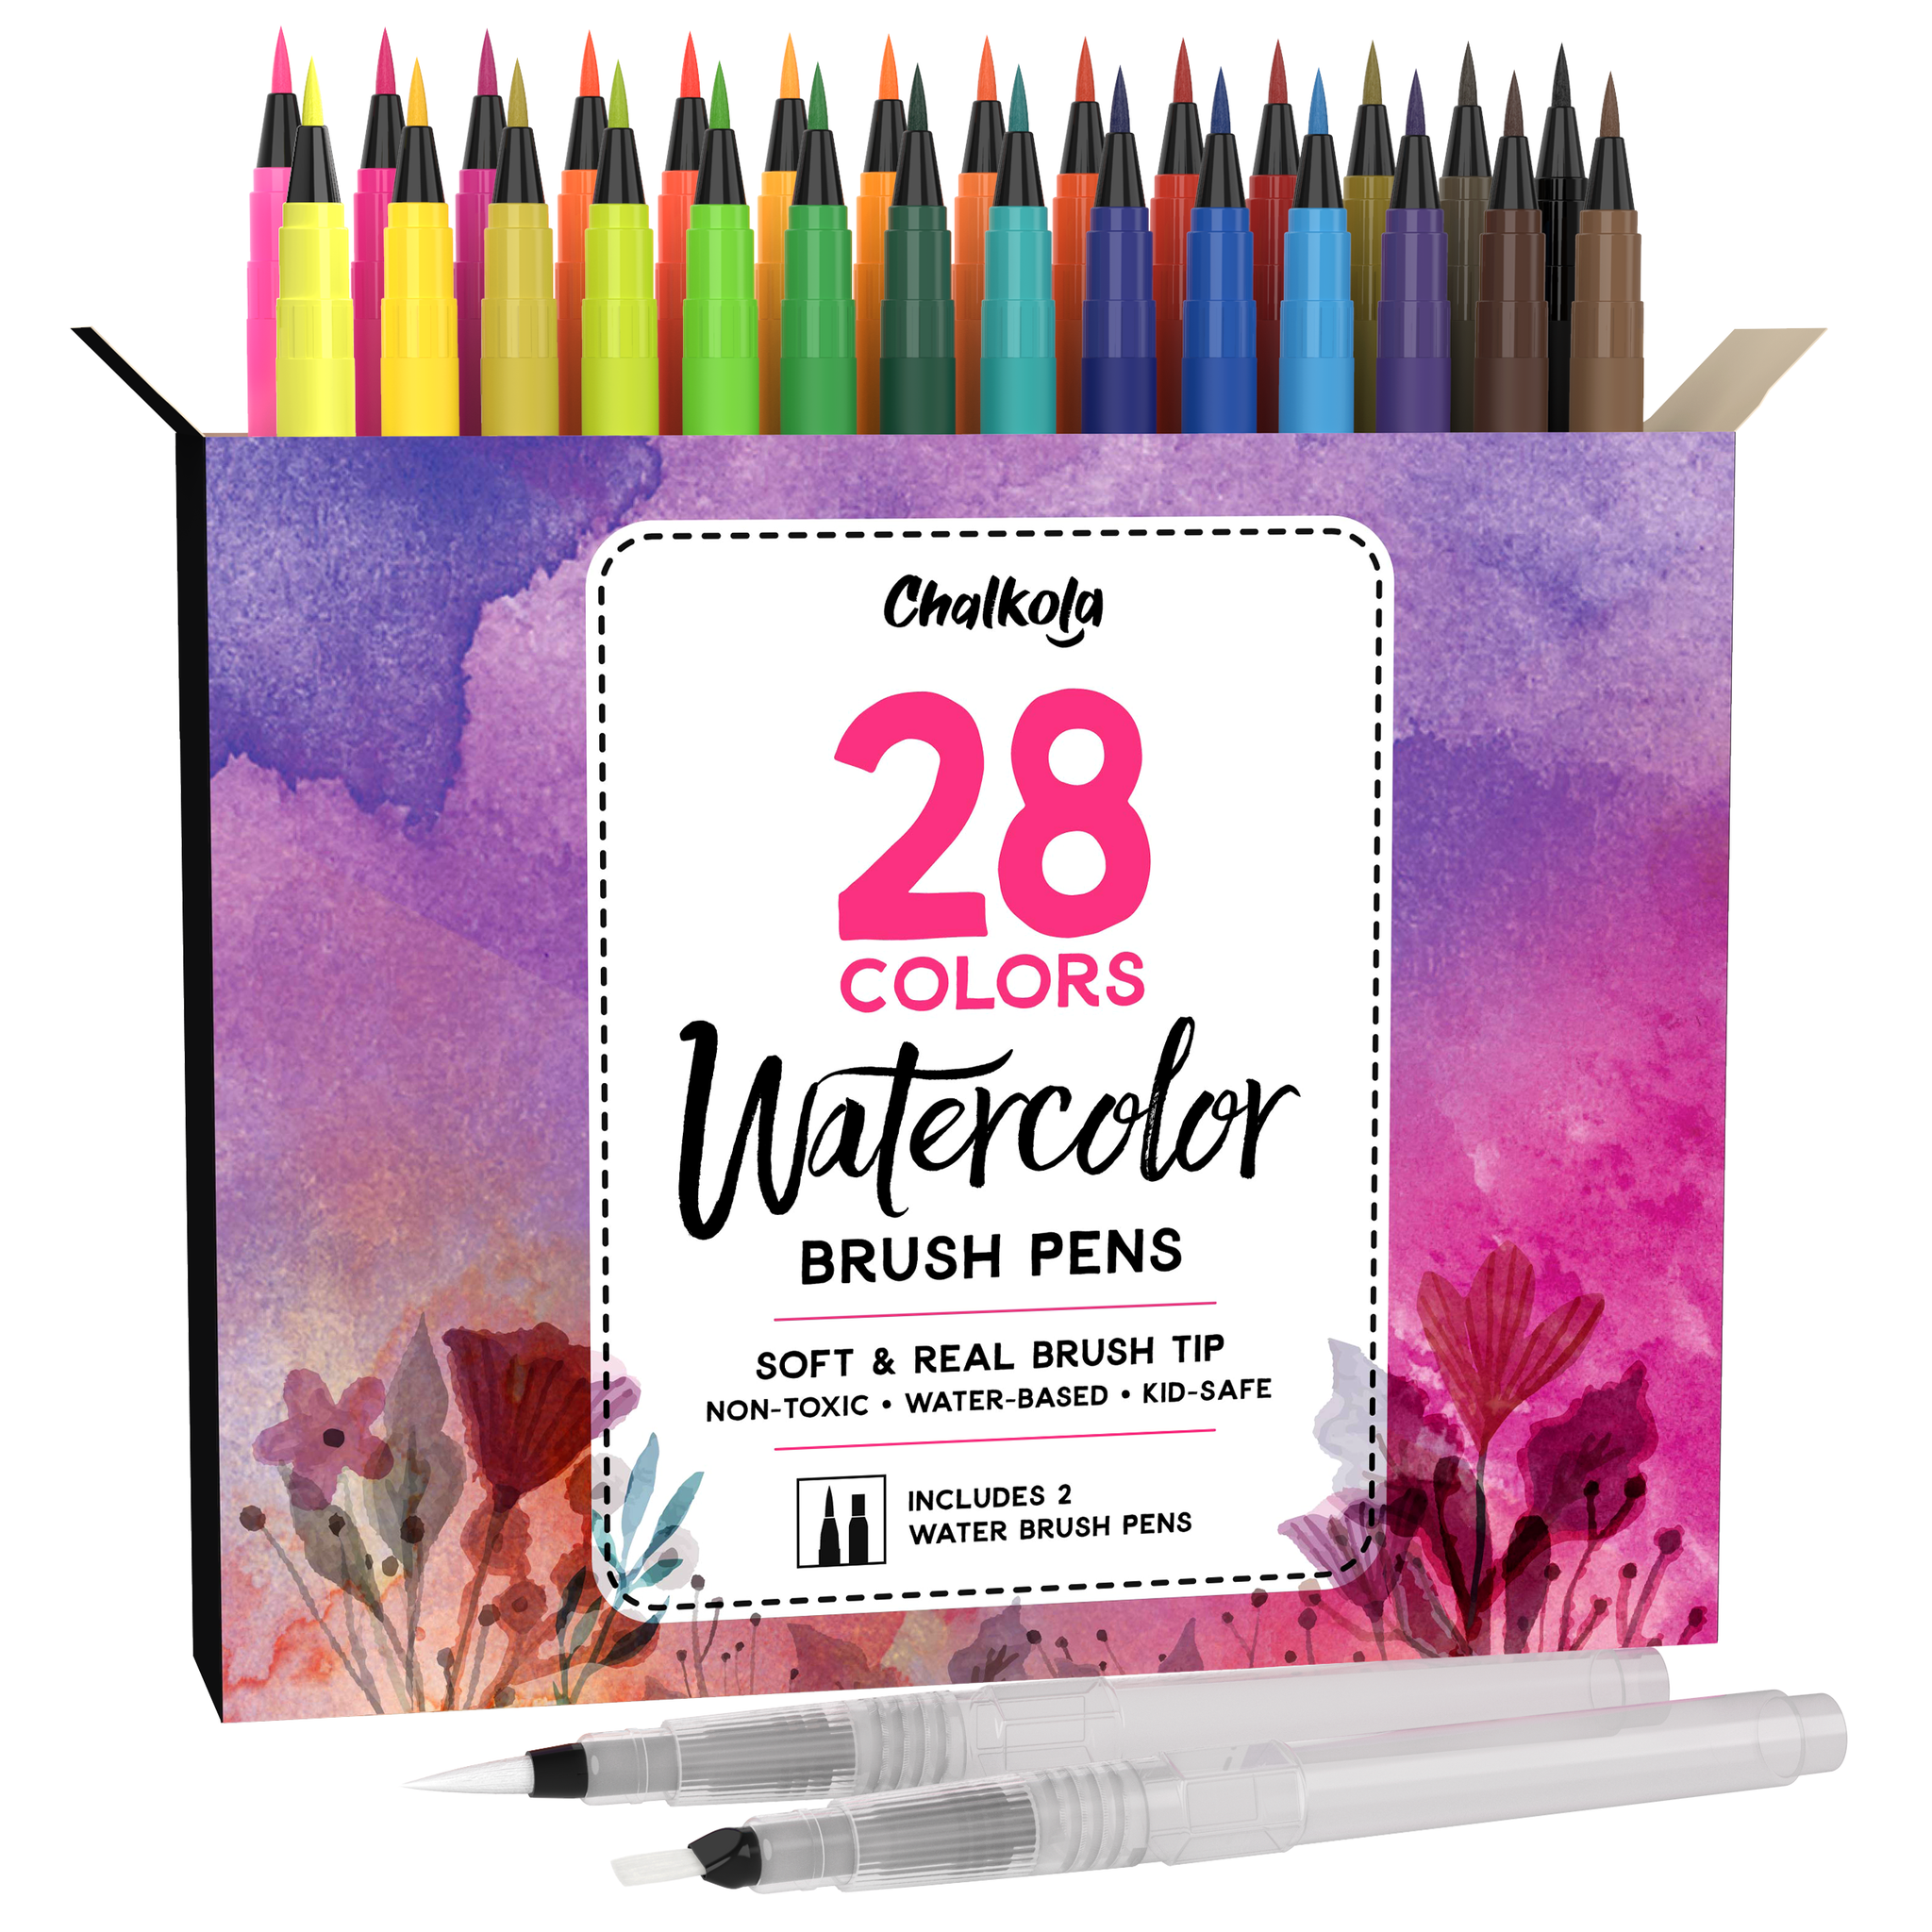 Watercolor Brush Pens vs. Calligraphy Brush Pens - Chalkola